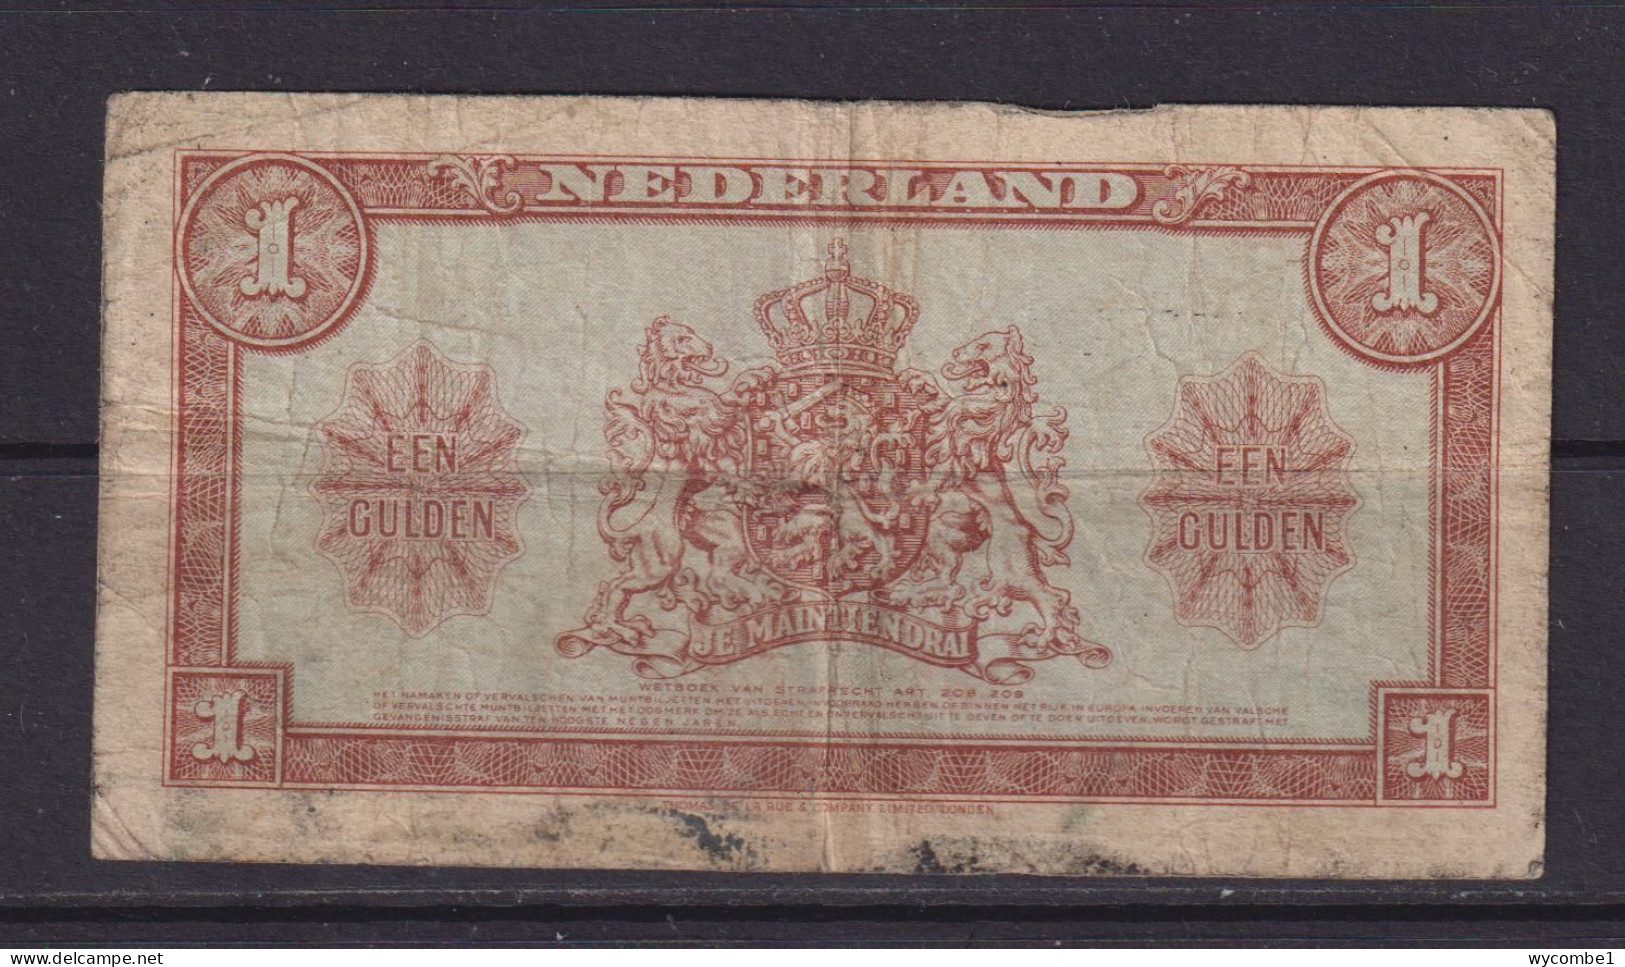 NETHERLANDS - 1945 1 Gulden Circulated Banknote - 1 Gulde